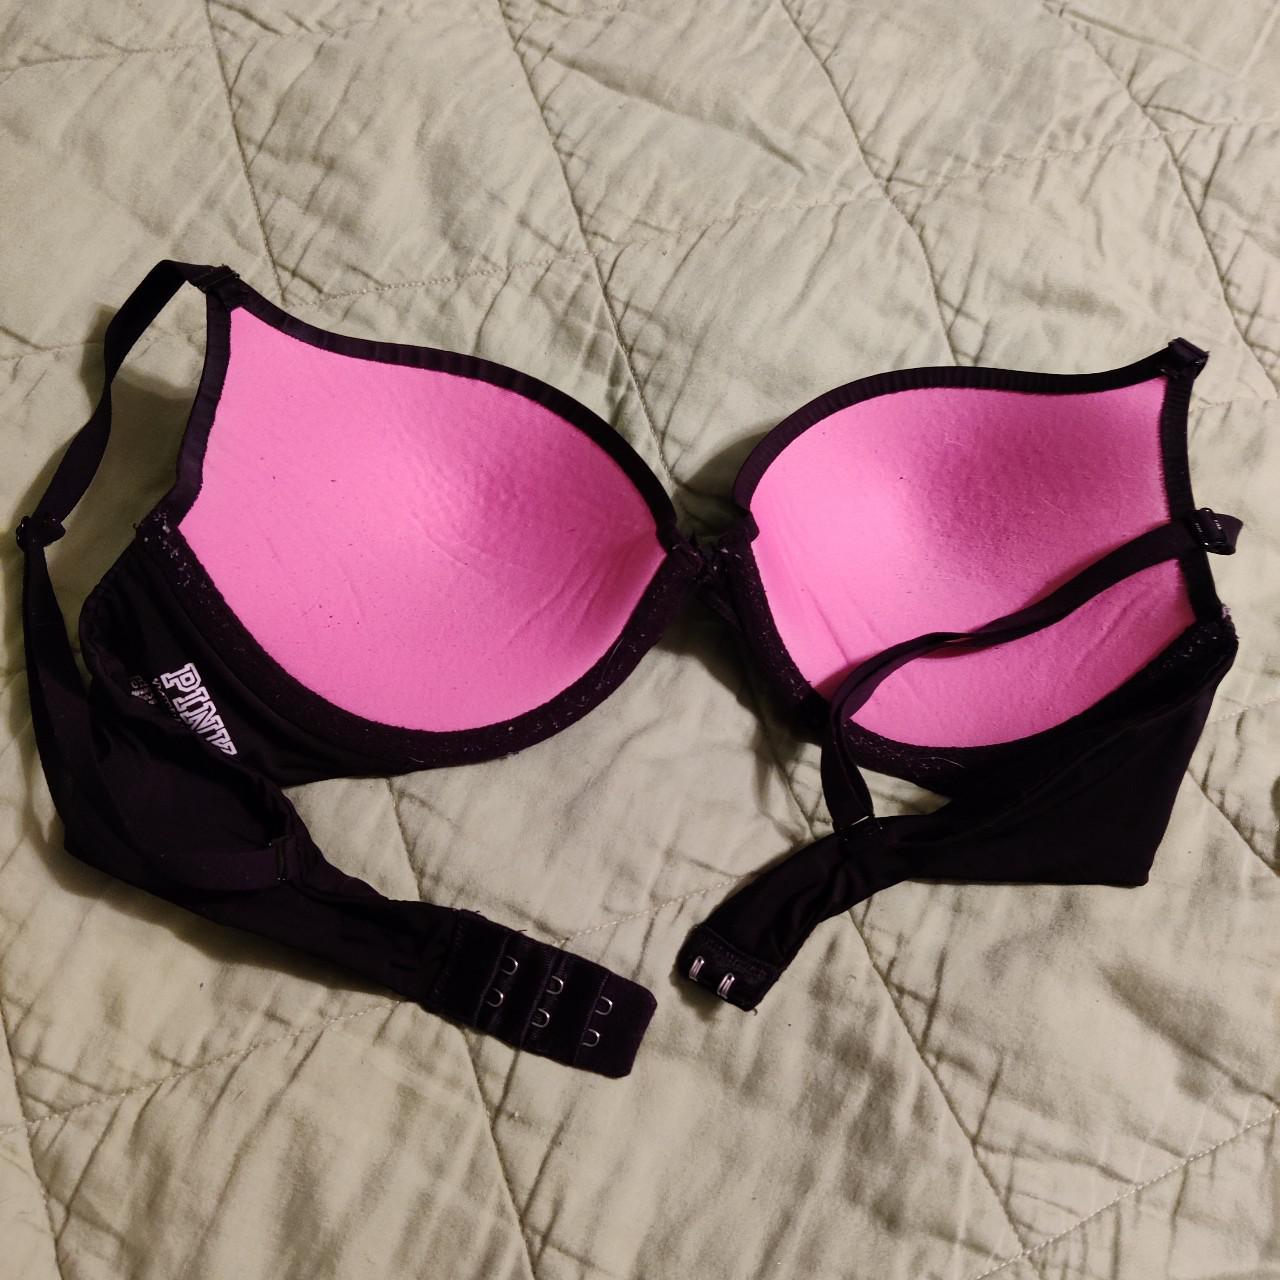 VICTORIAS SECRET - pushup bras ✧ pink one has - Depop